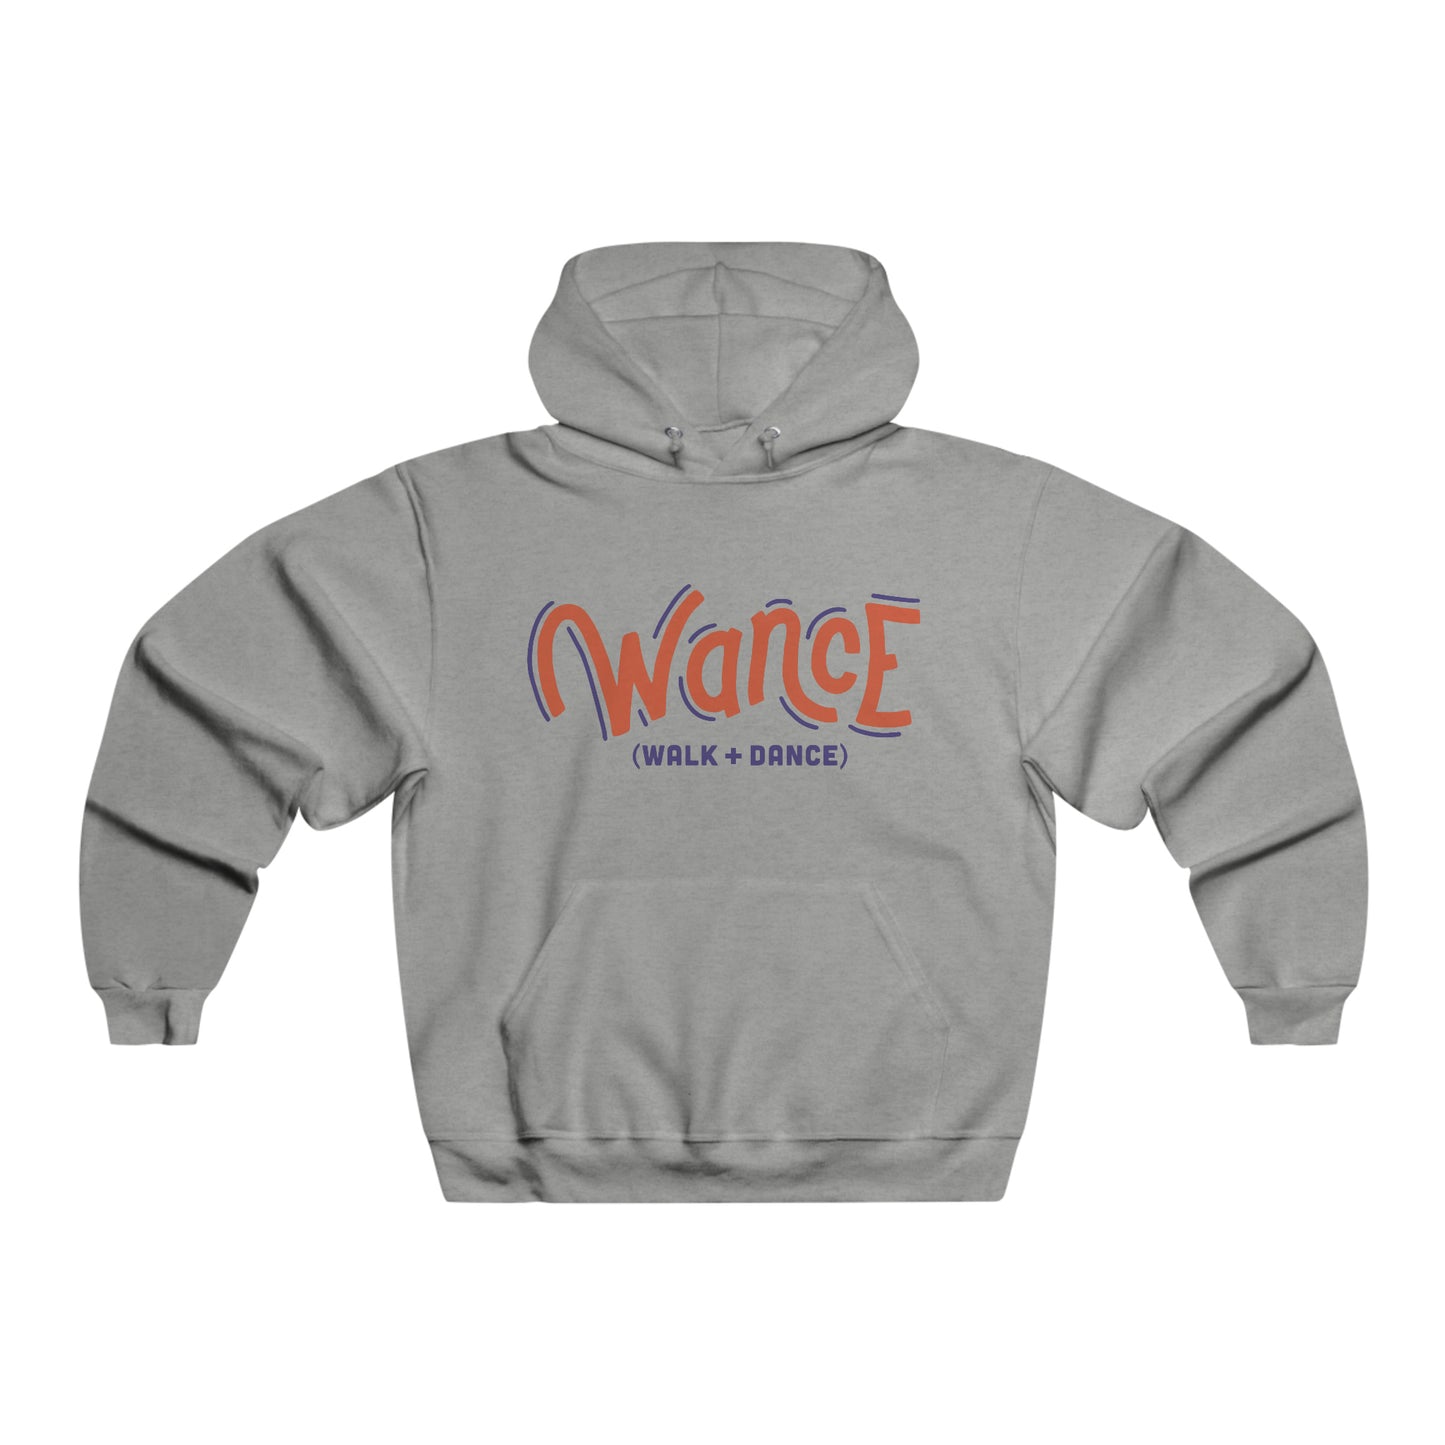 WANCE (walk + dance) Hooded Sweatshirt